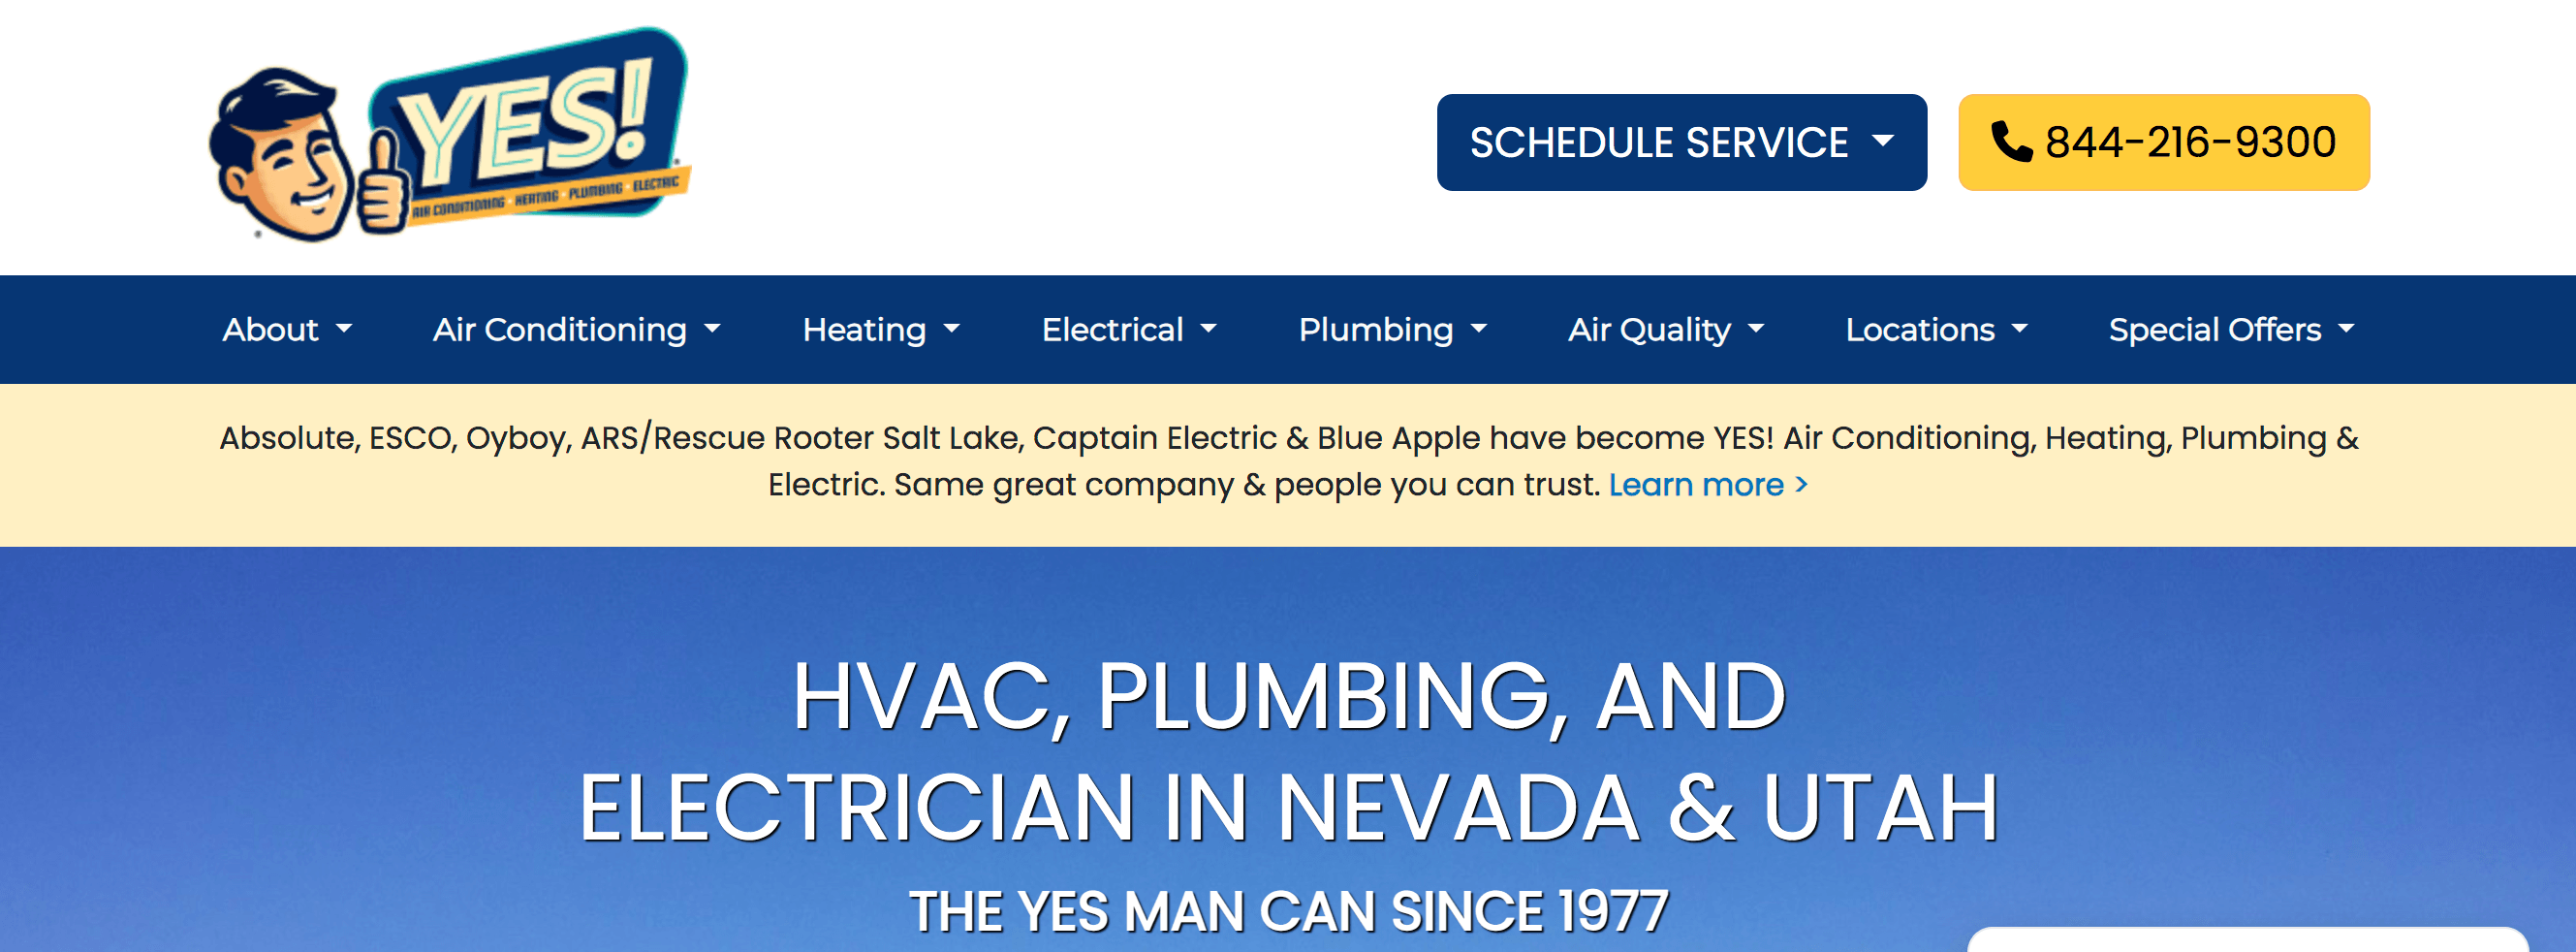 Homepage for HVAC website